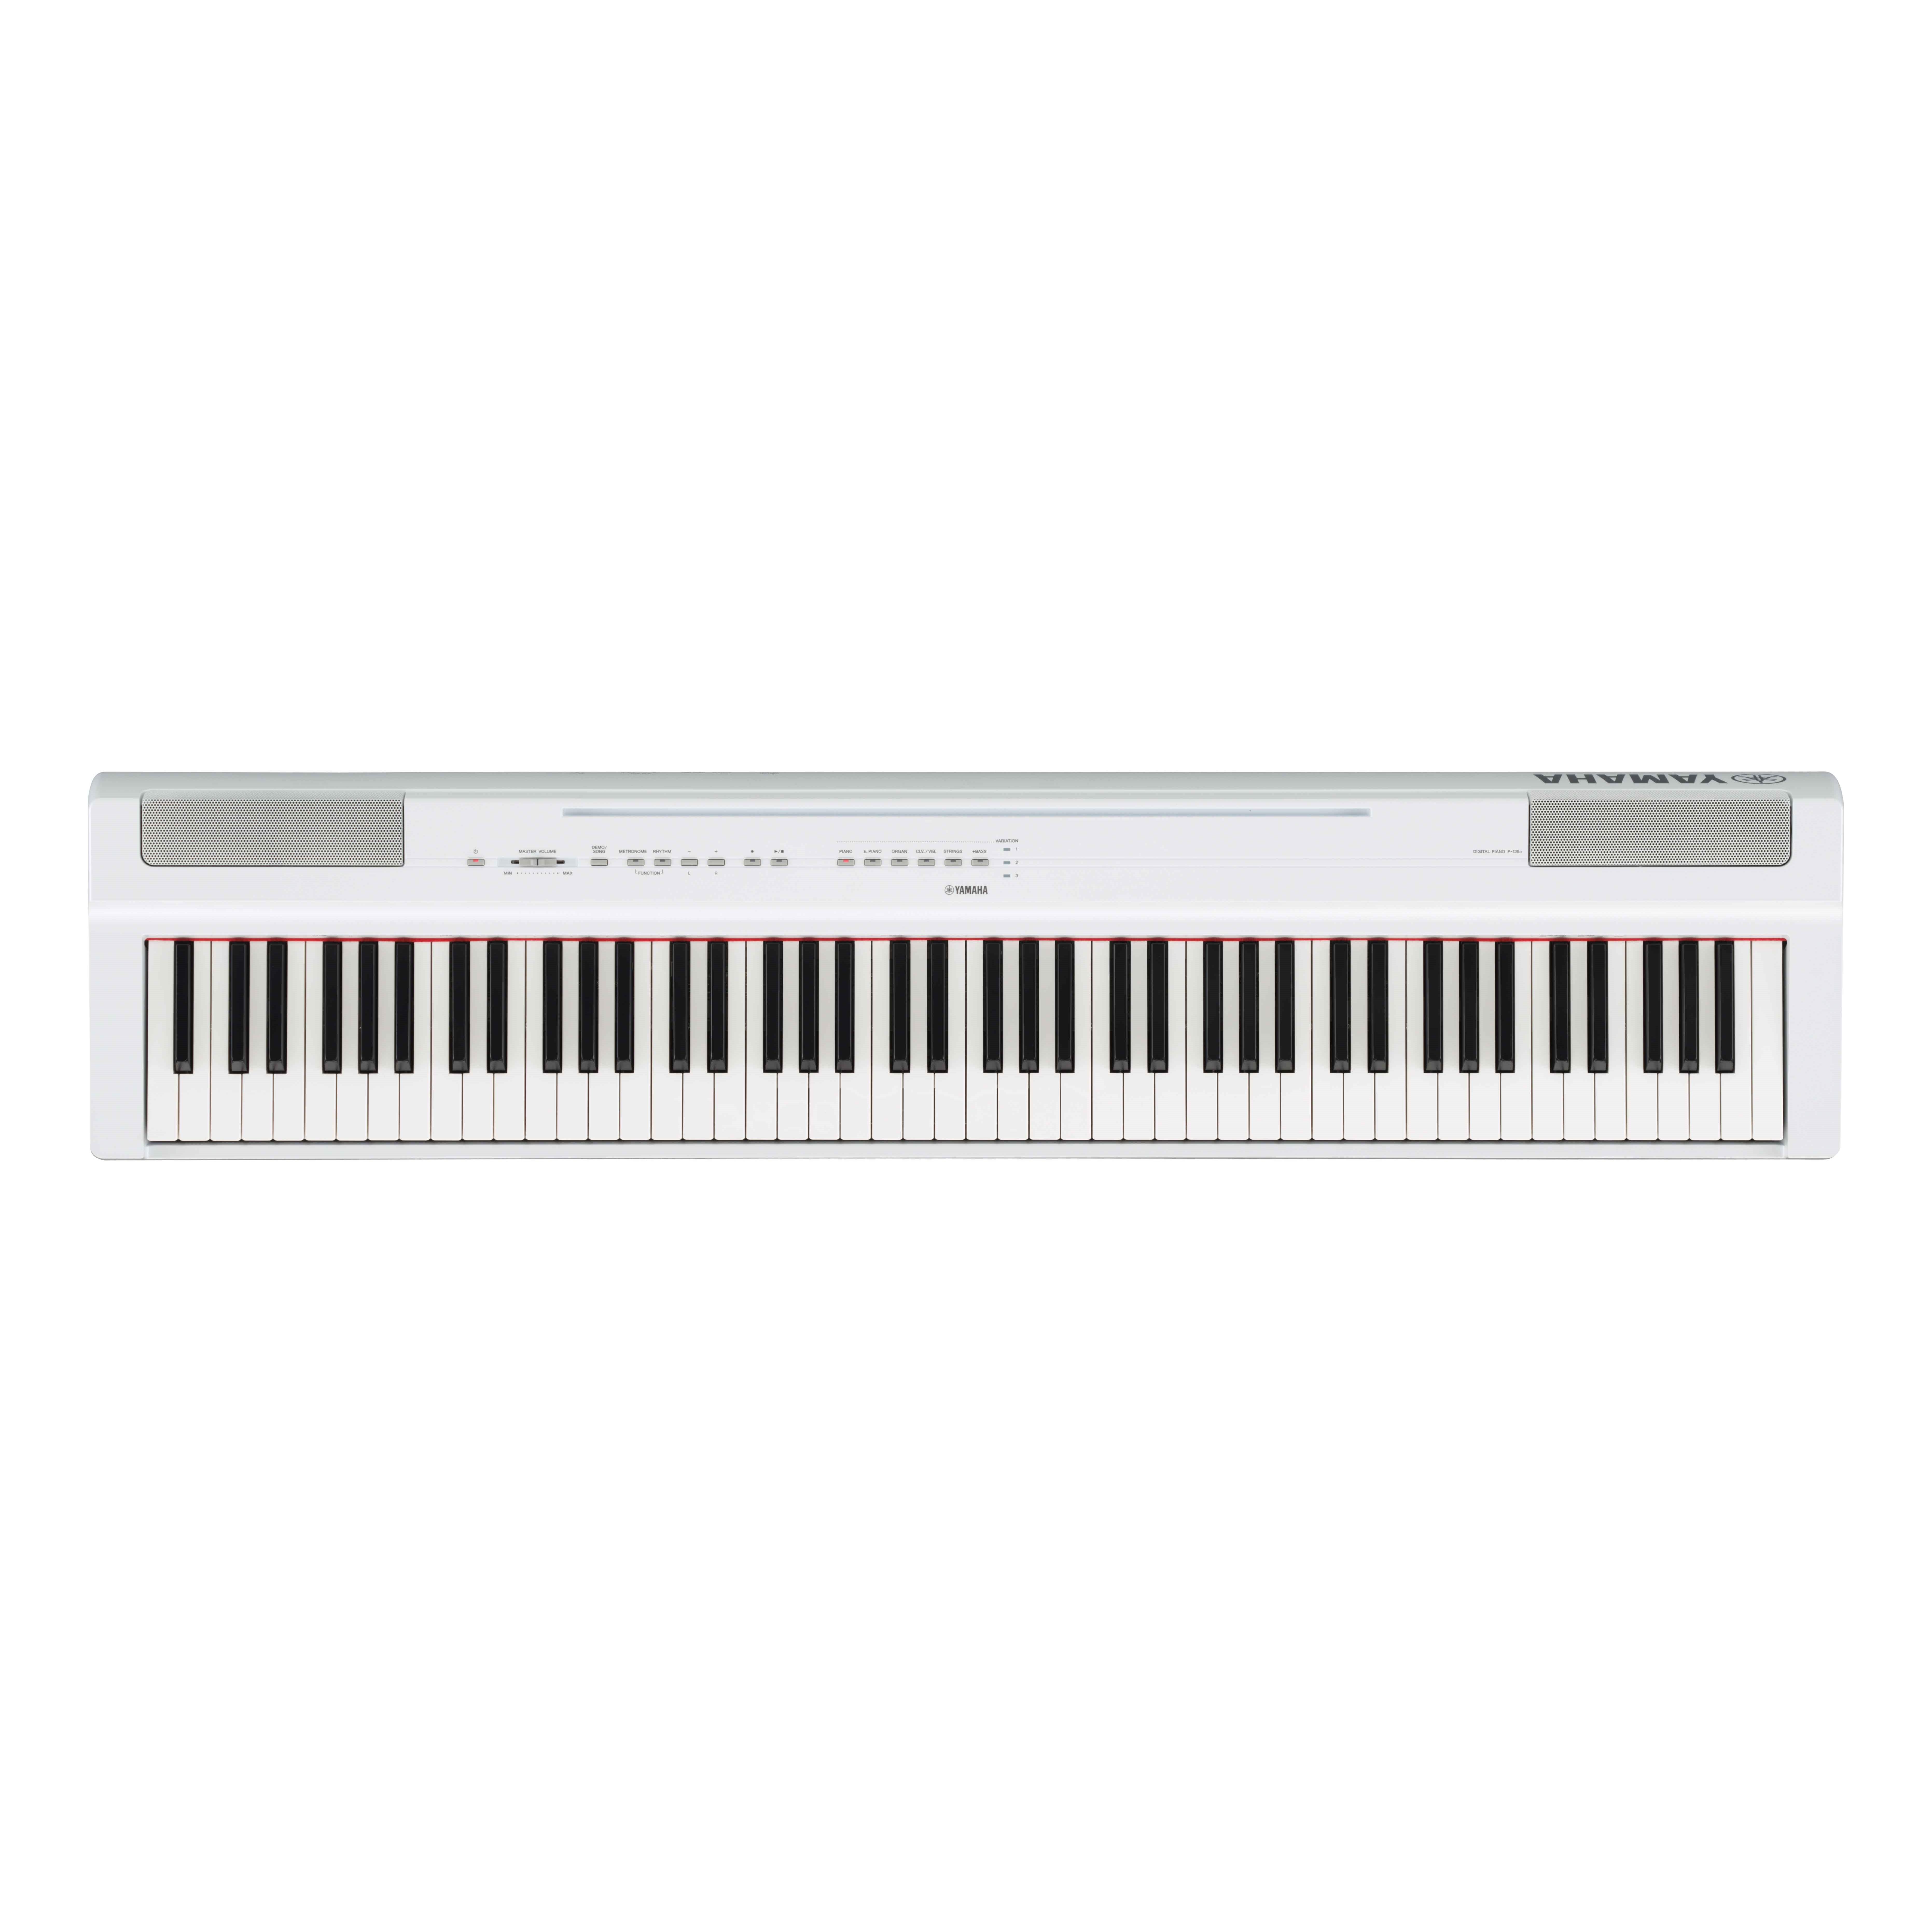 Берущий октаву. Цифровые пианино Kawai es110w. Миди клавиатура m-Audio Keystation 61. Midi-клавиатура Korg k61. Цифровое пианино Roland FP-30x.